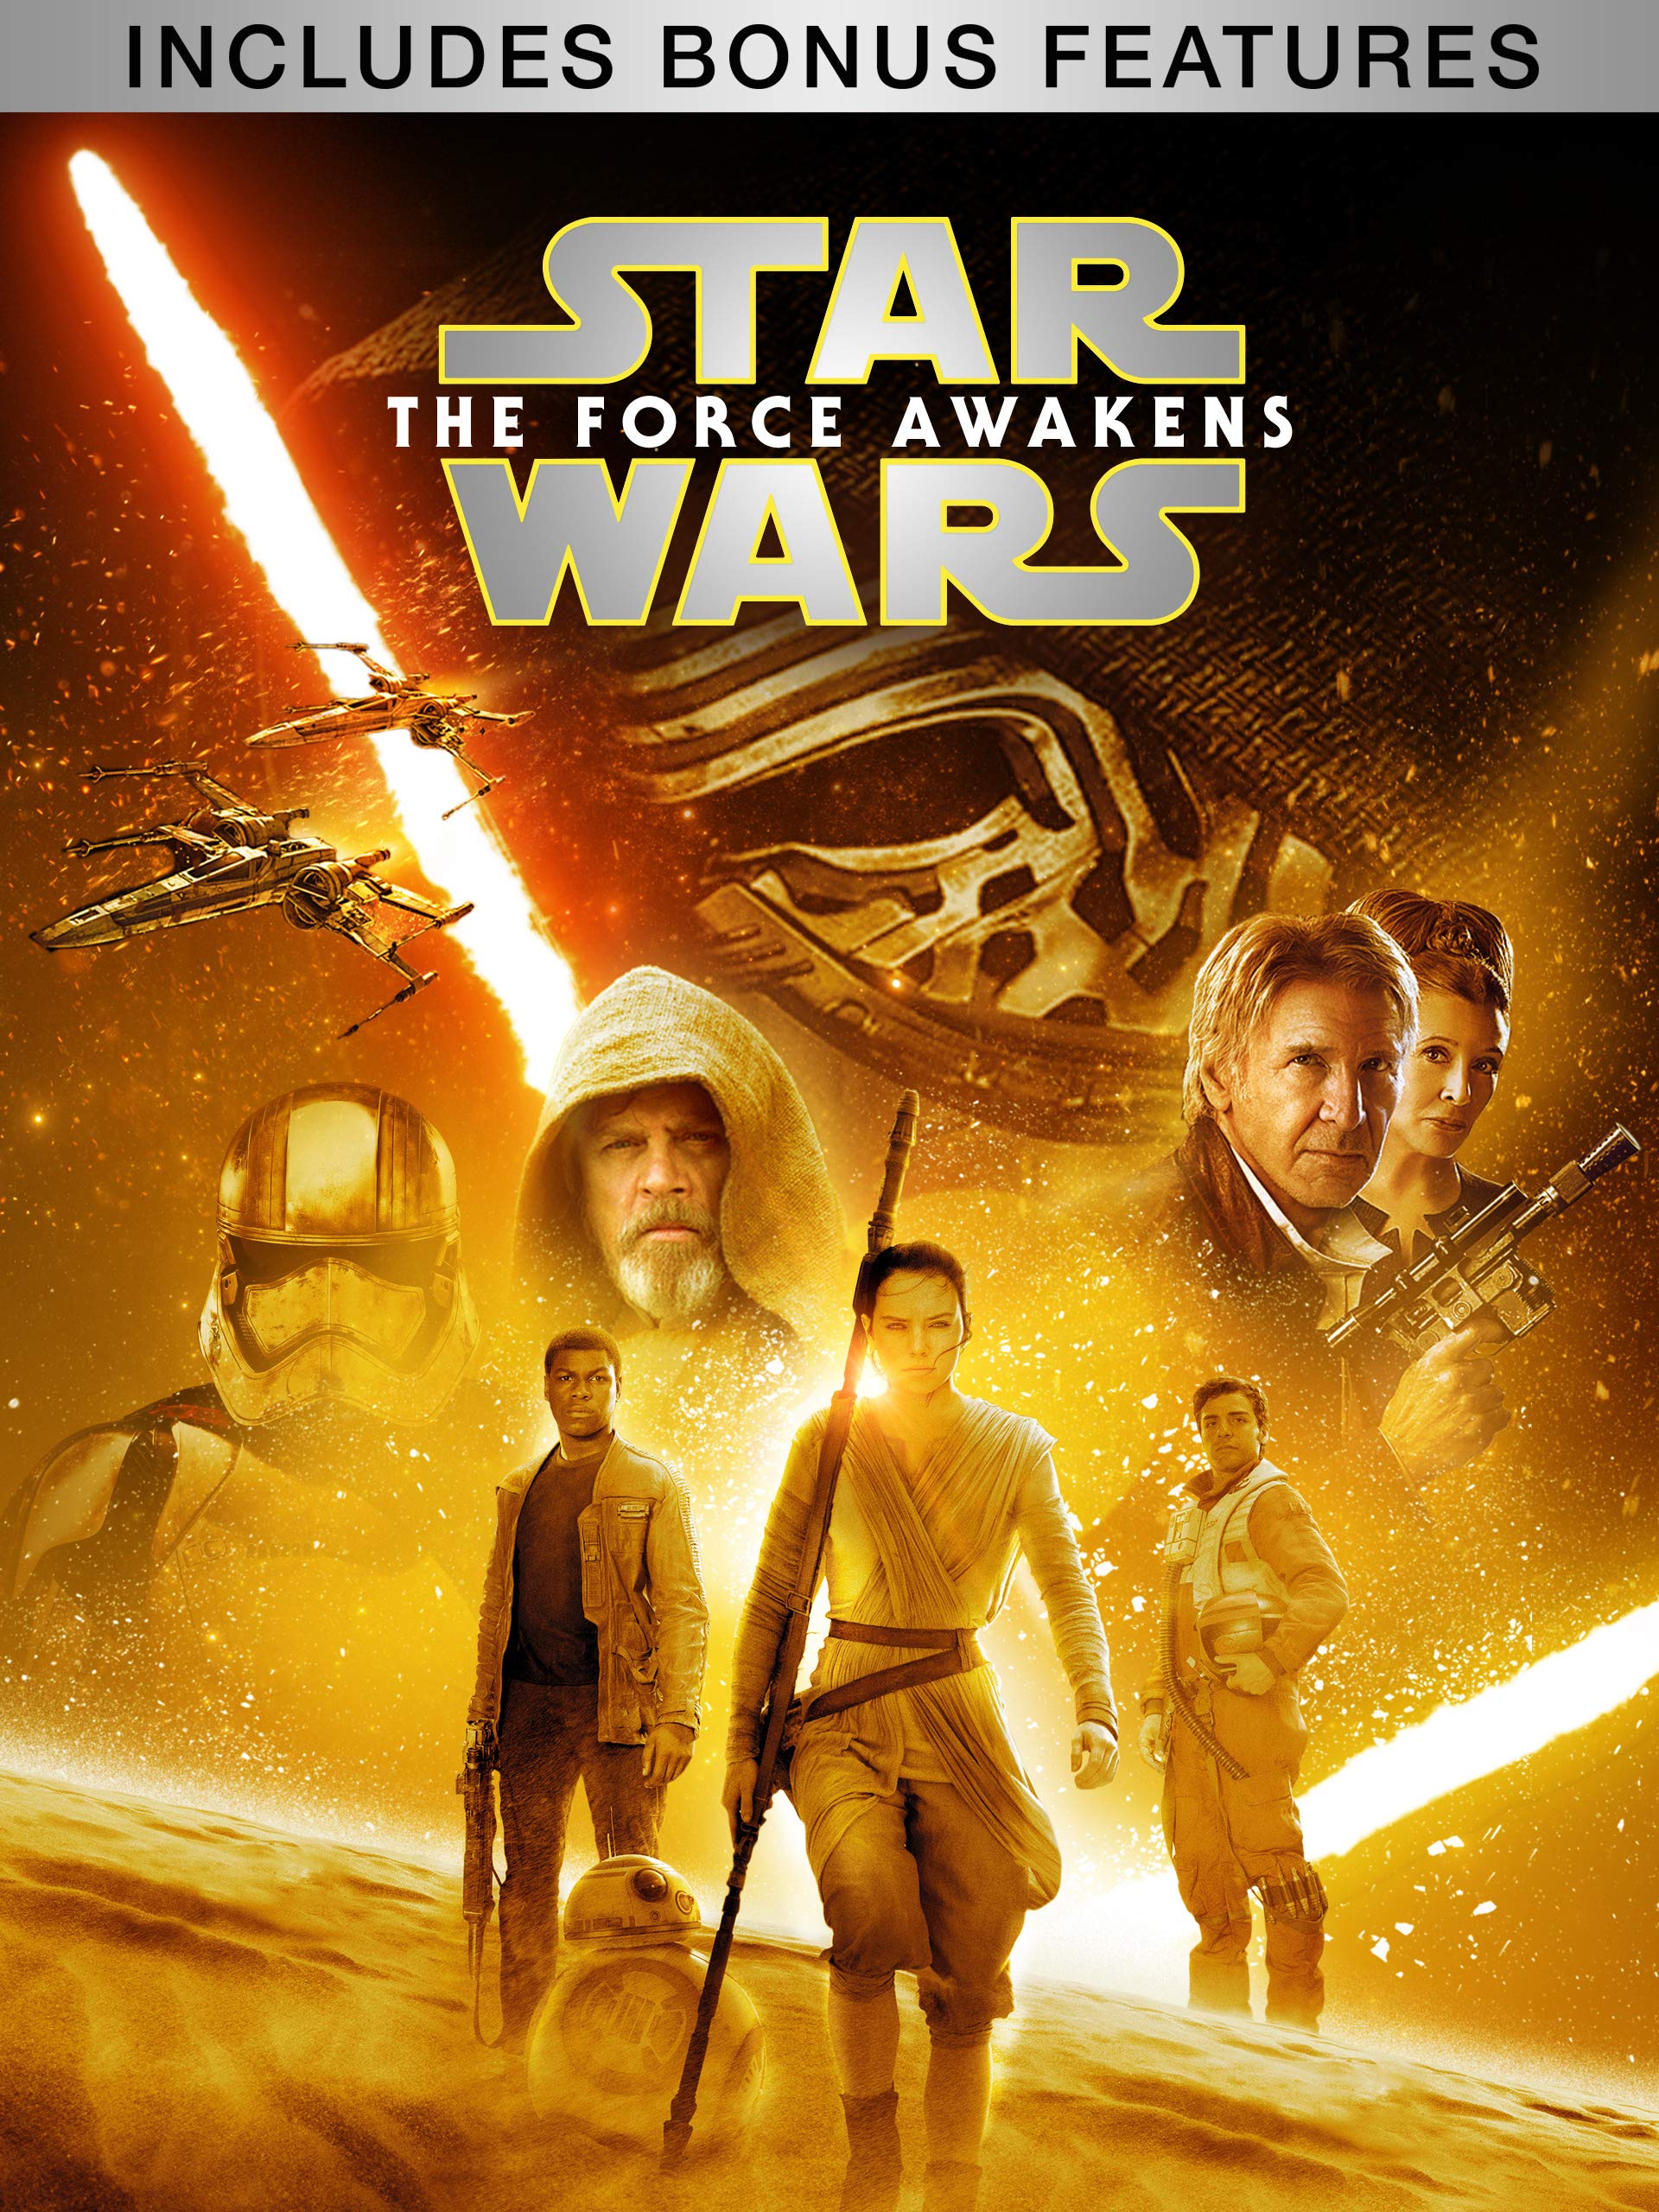 The Force Awakens (2015) starring Daisy Ridley, John Boyega, Adam Driver, Harrison Ford, Carrie Fisher